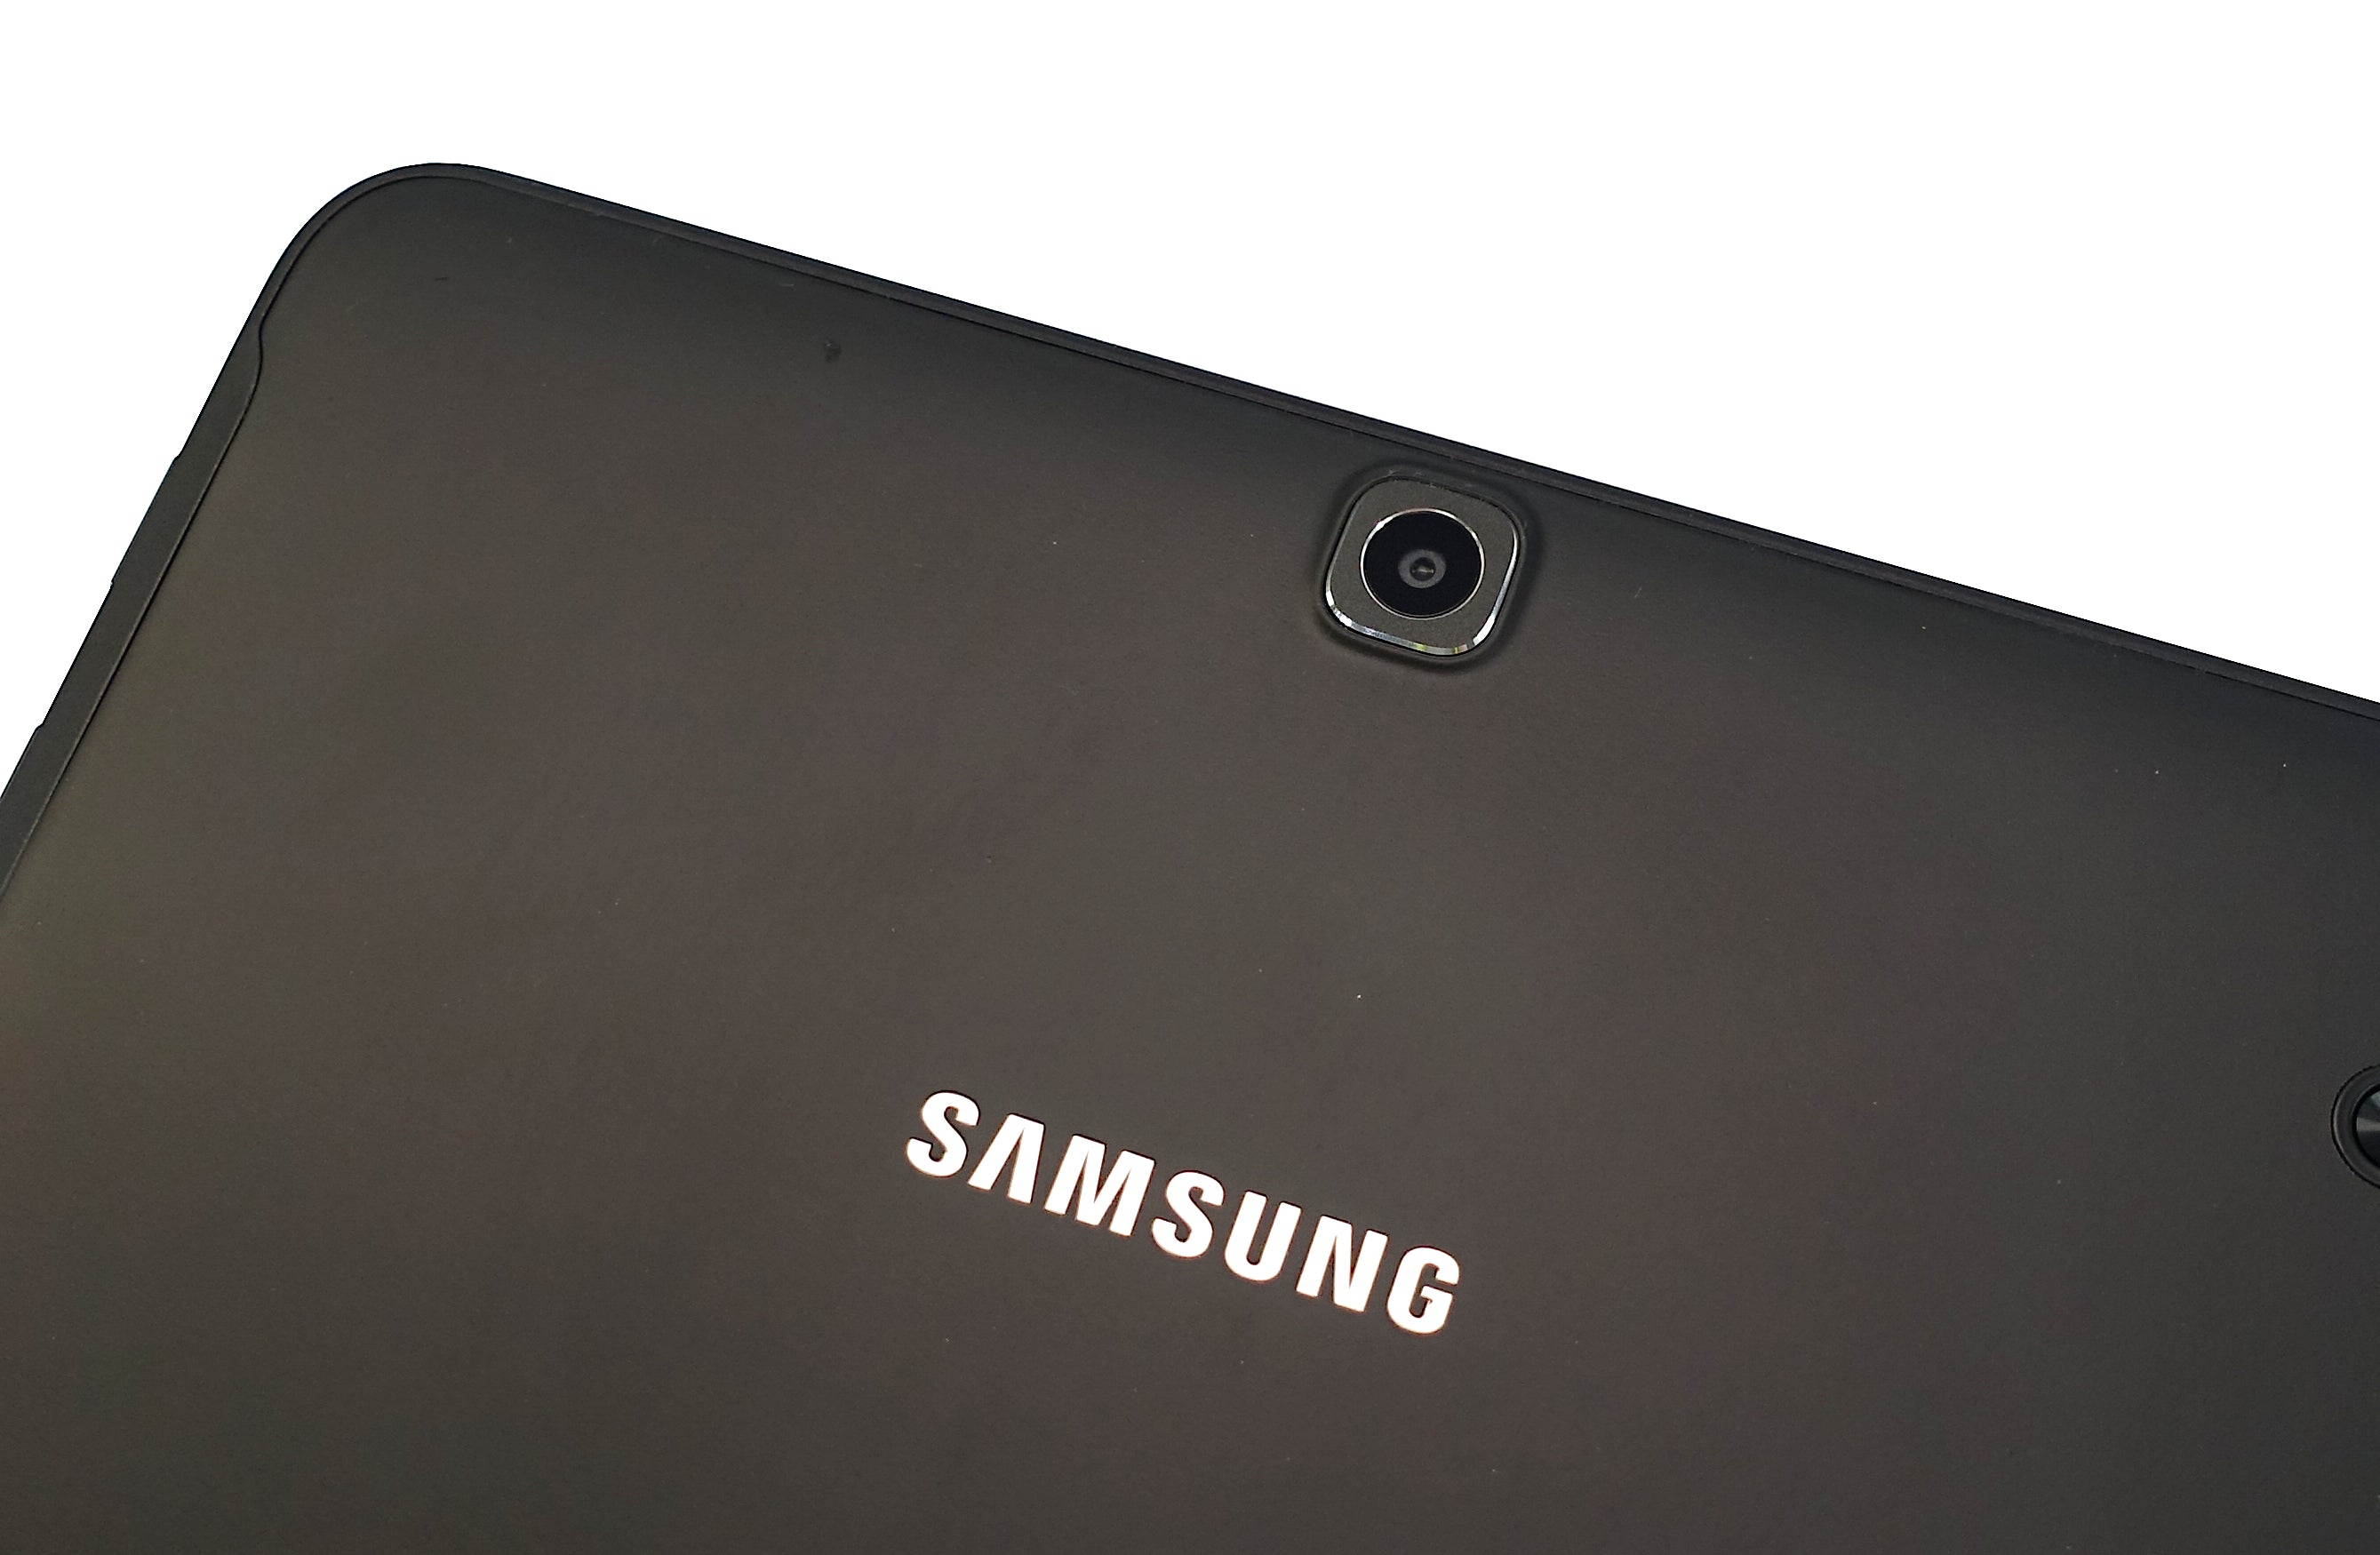 Samsung Galaxy Tab S2 9.7" Tablet, WiFi, 32GB, Black, SM-T810